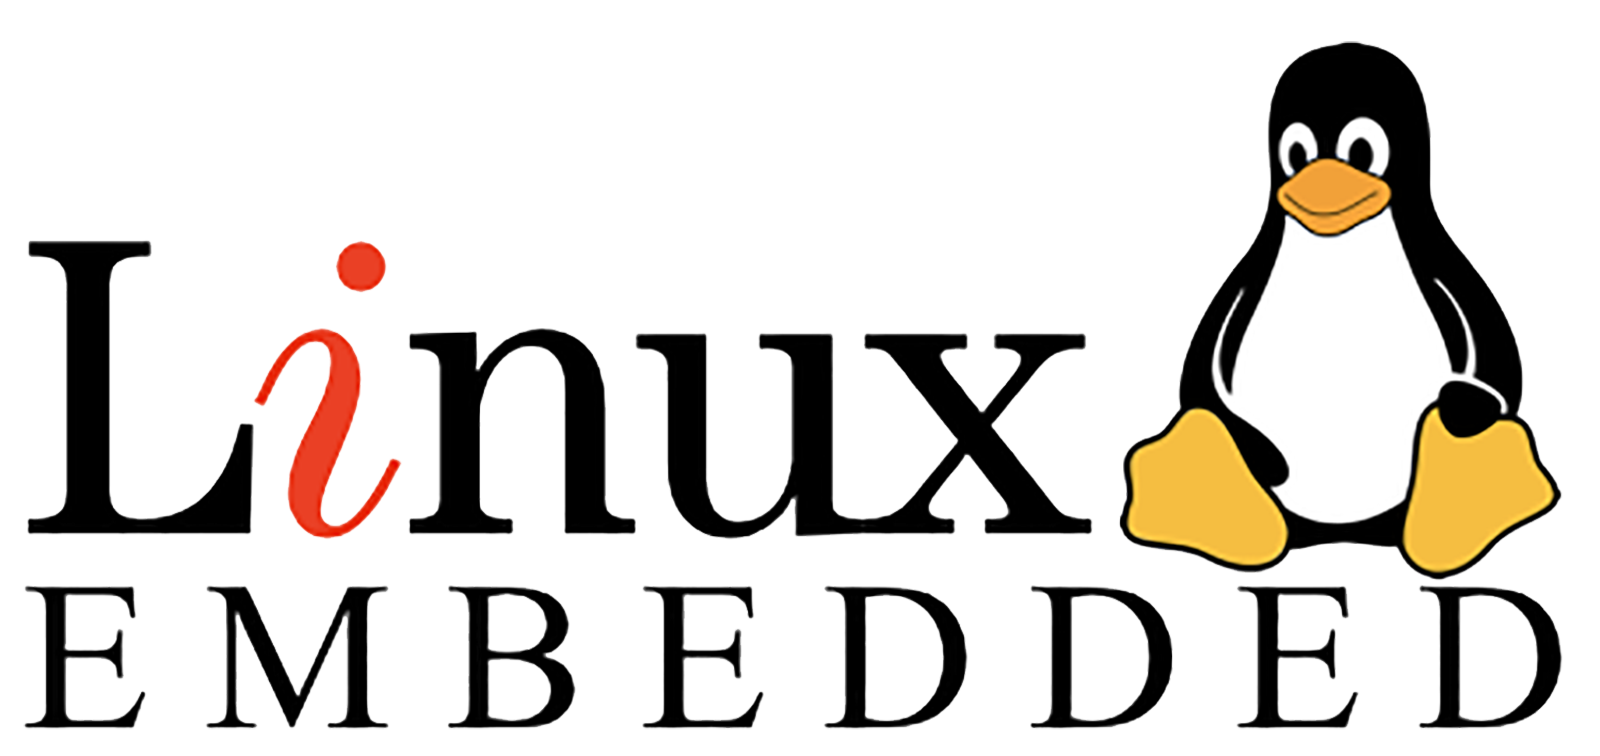 Embedded Operating System - Linux logo